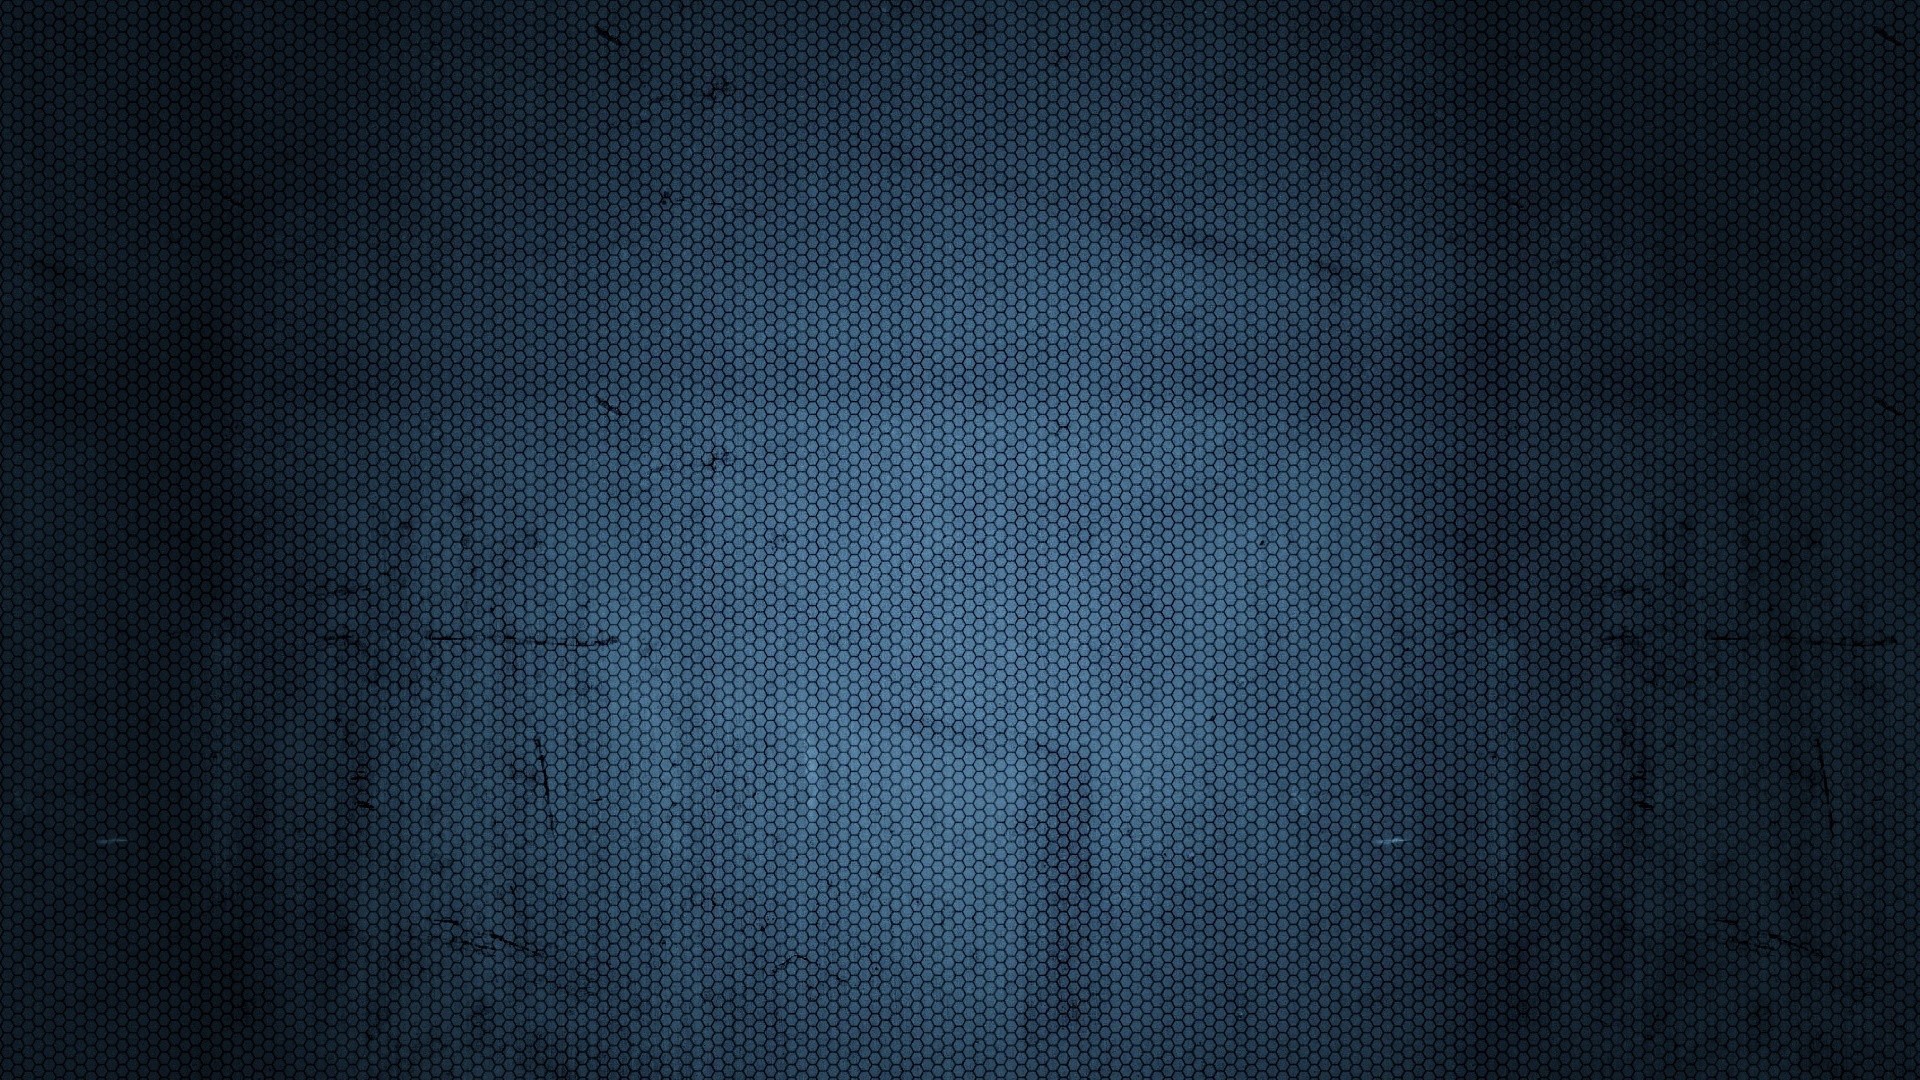 Hd Dark Blue Wallpapers